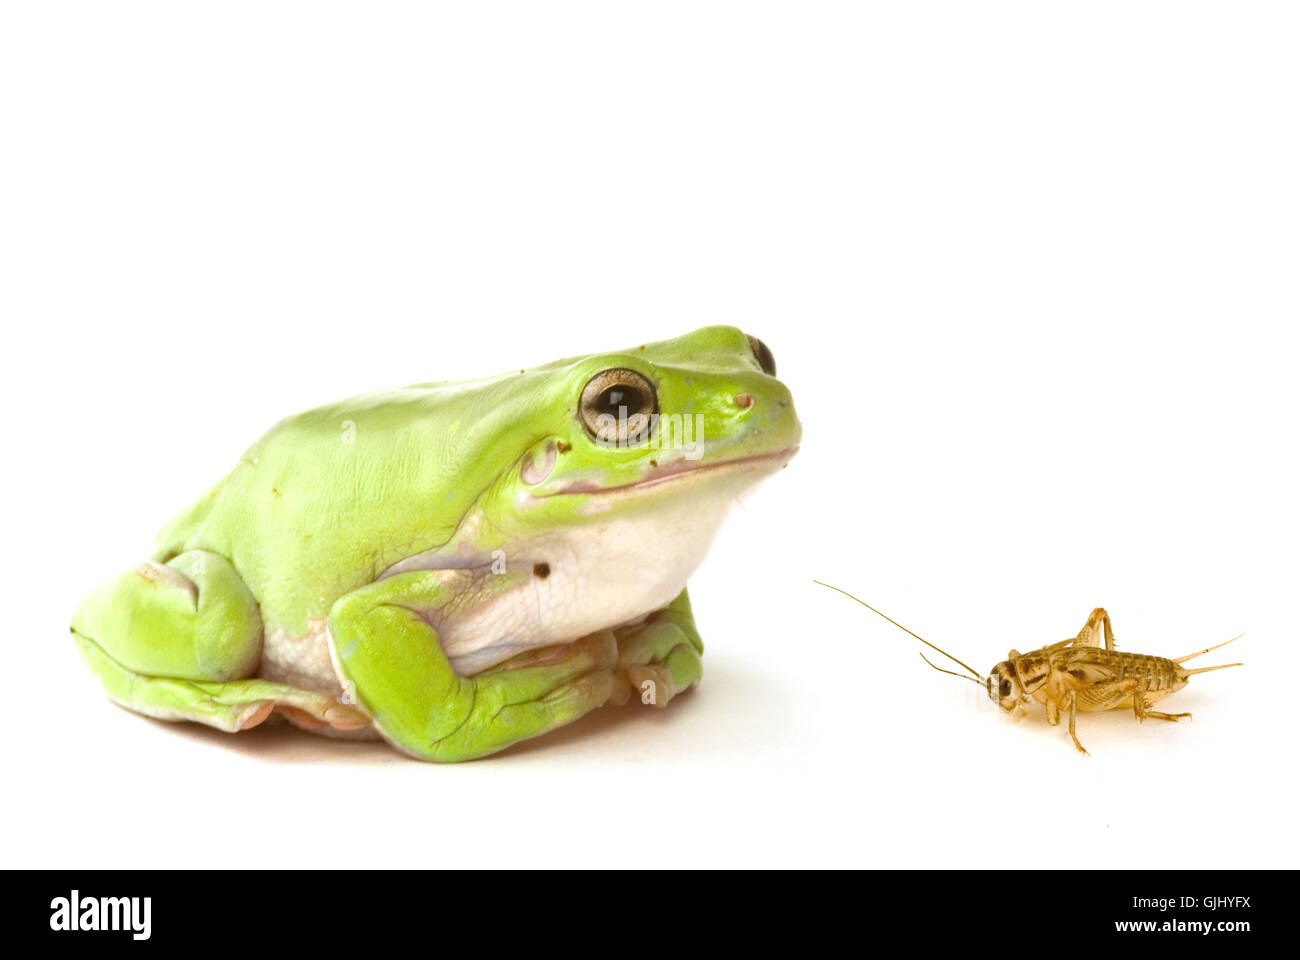 animal pet frog Stock Photo